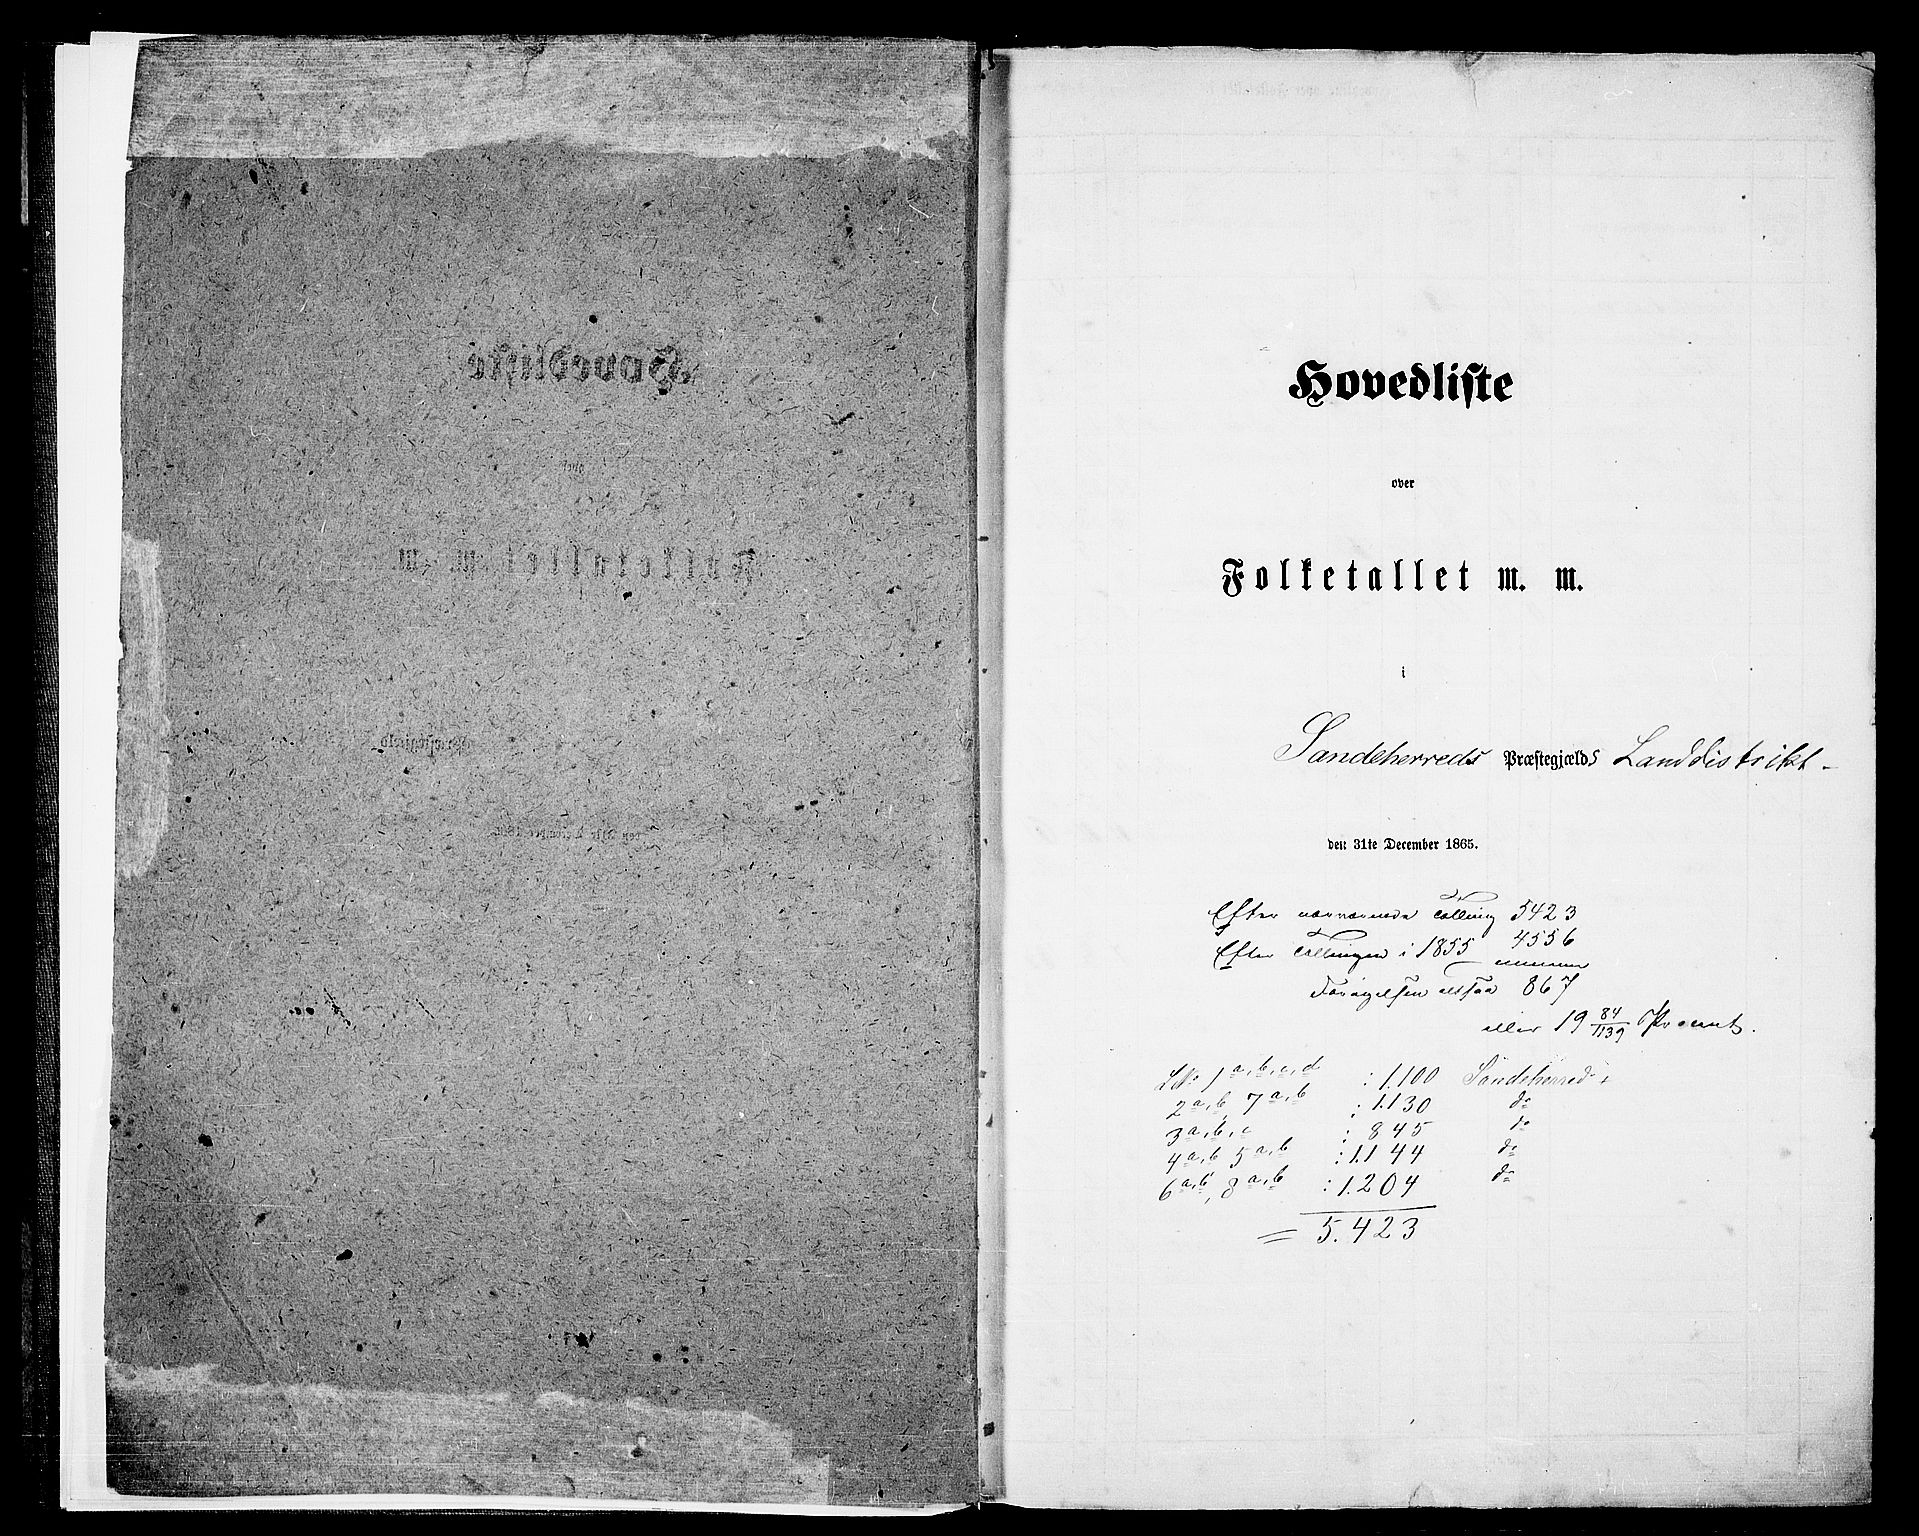 RA, Folketelling 1865 for 0724L Sandeherred prestegjeld, Sandeherred sokn, 1865, s. 5